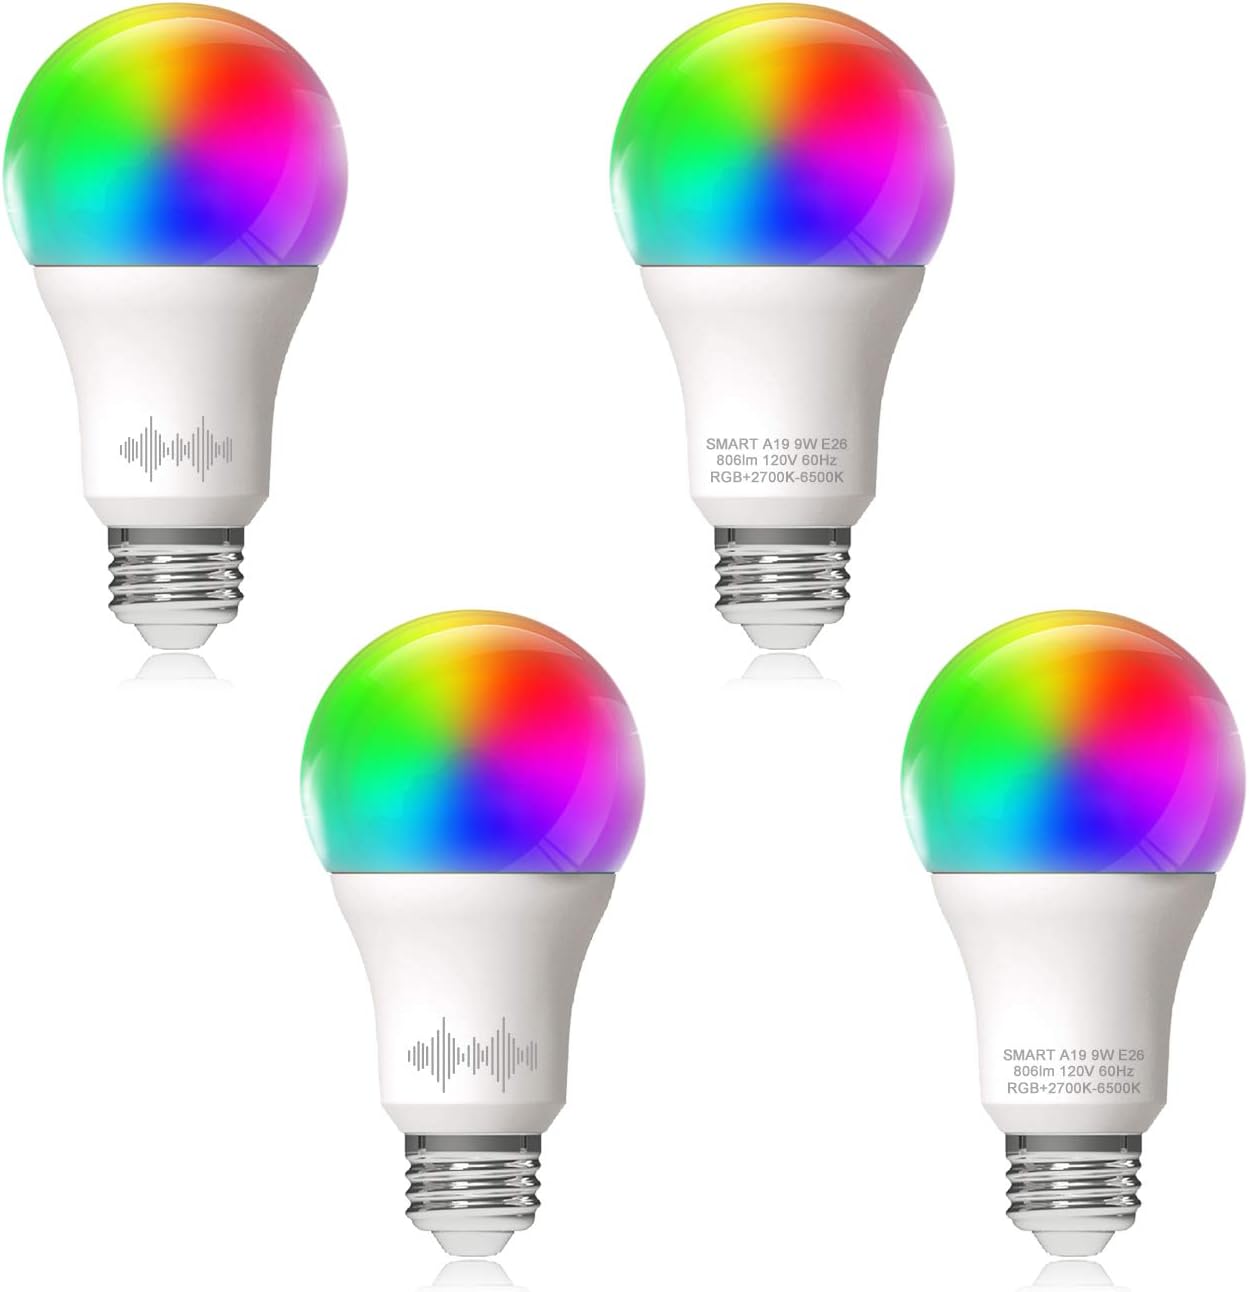 Helloify A19 LED Smart Bulb Review